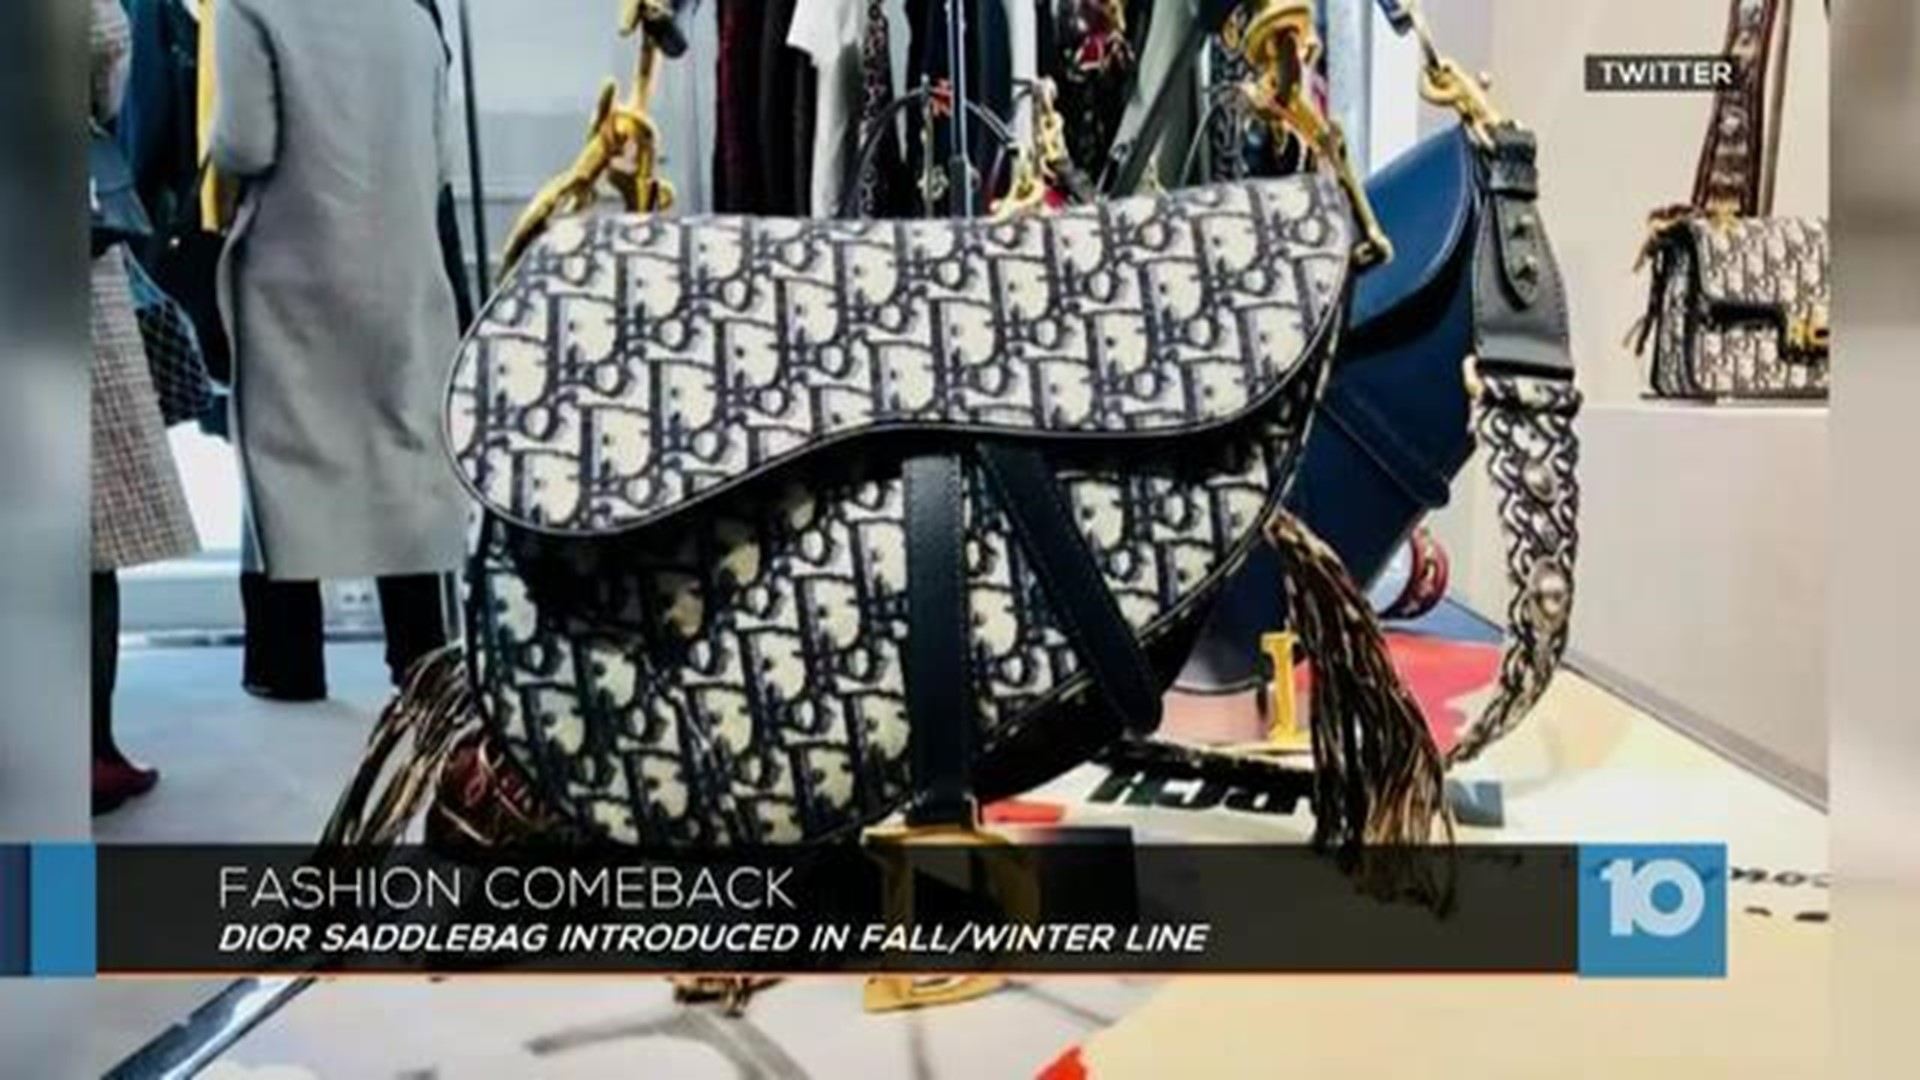 Christian Dior's Saddle Bag Makes a Comeback - BellaVitaStyle